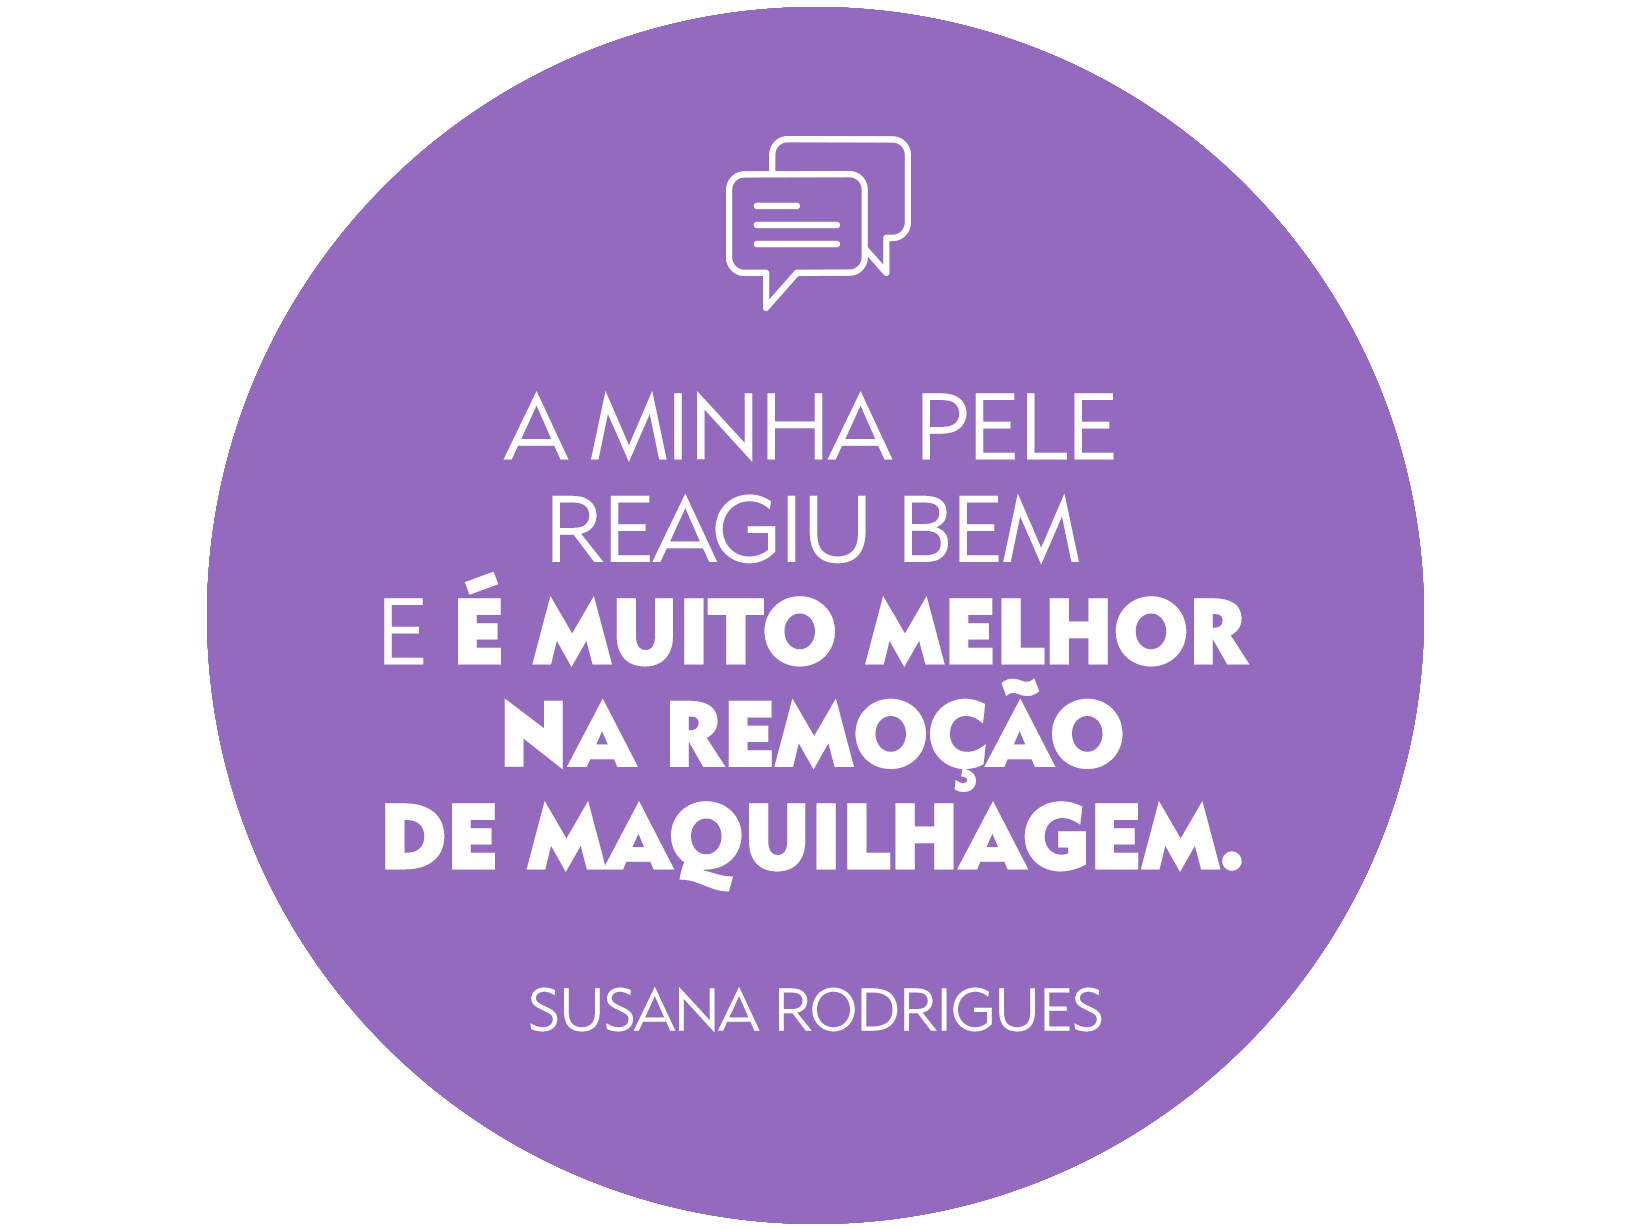 Review NIVEA Susana Rodrigues